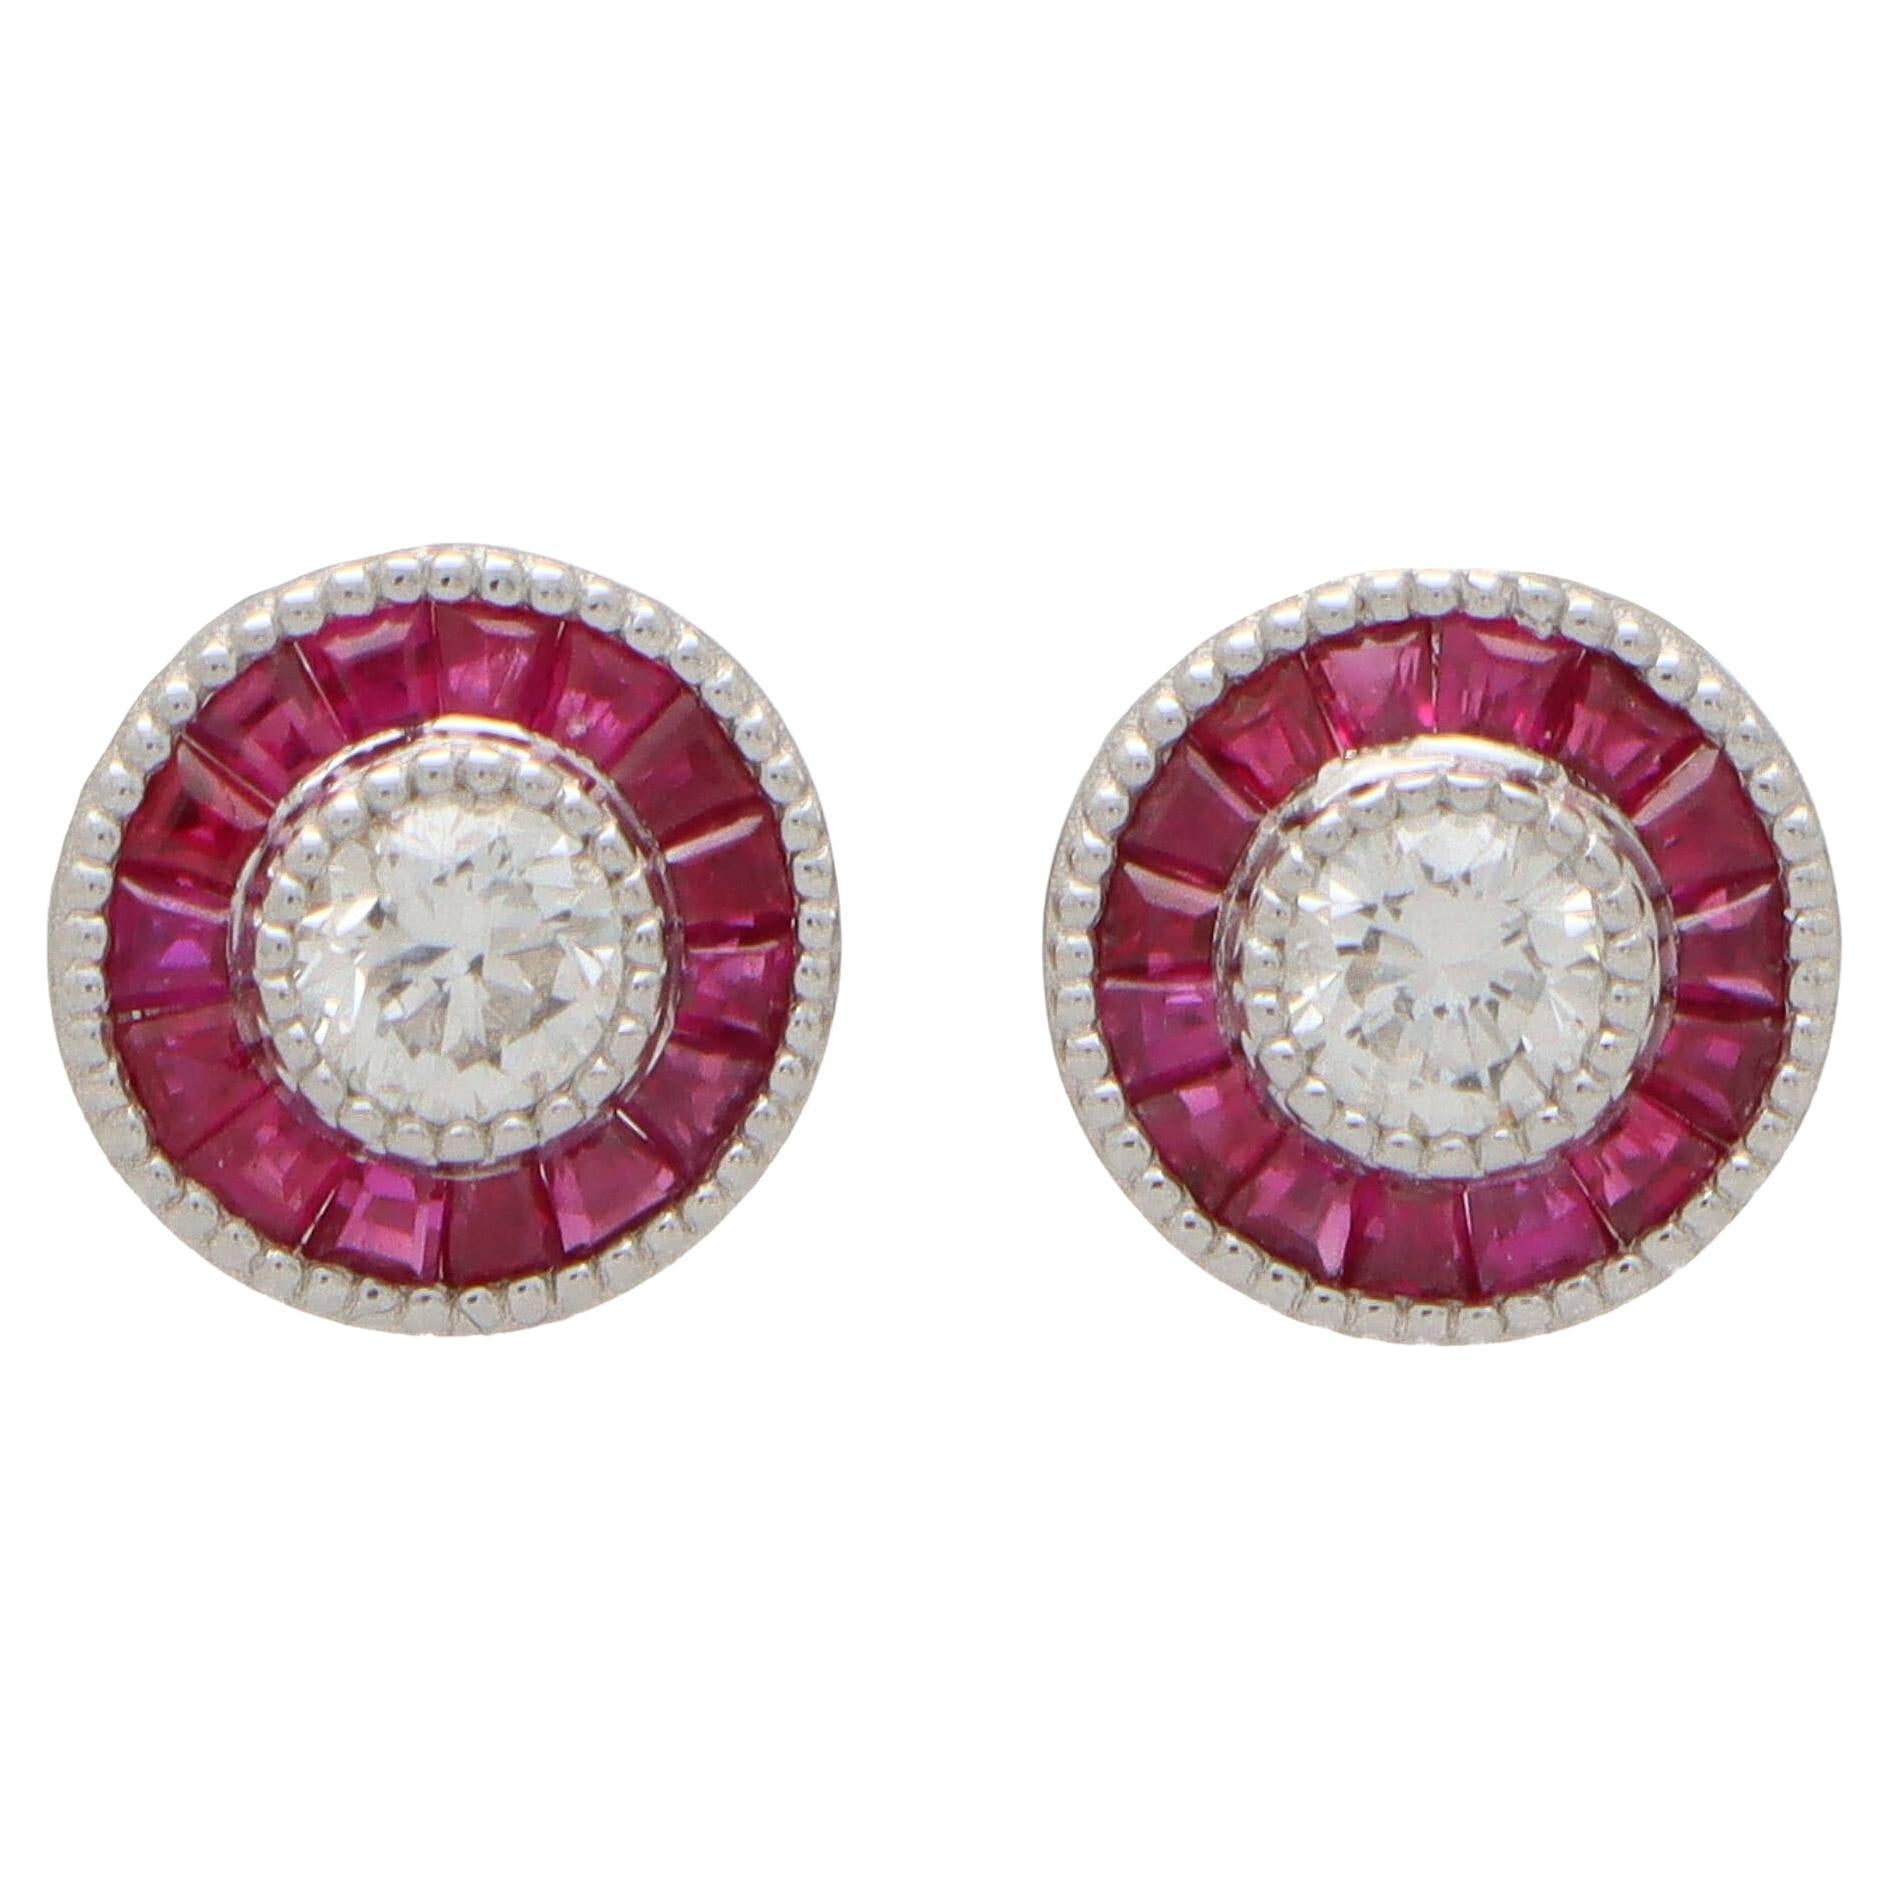 Art Deco Inspired Ruby and Diamond Target Stud Earrings in 18k White Gold